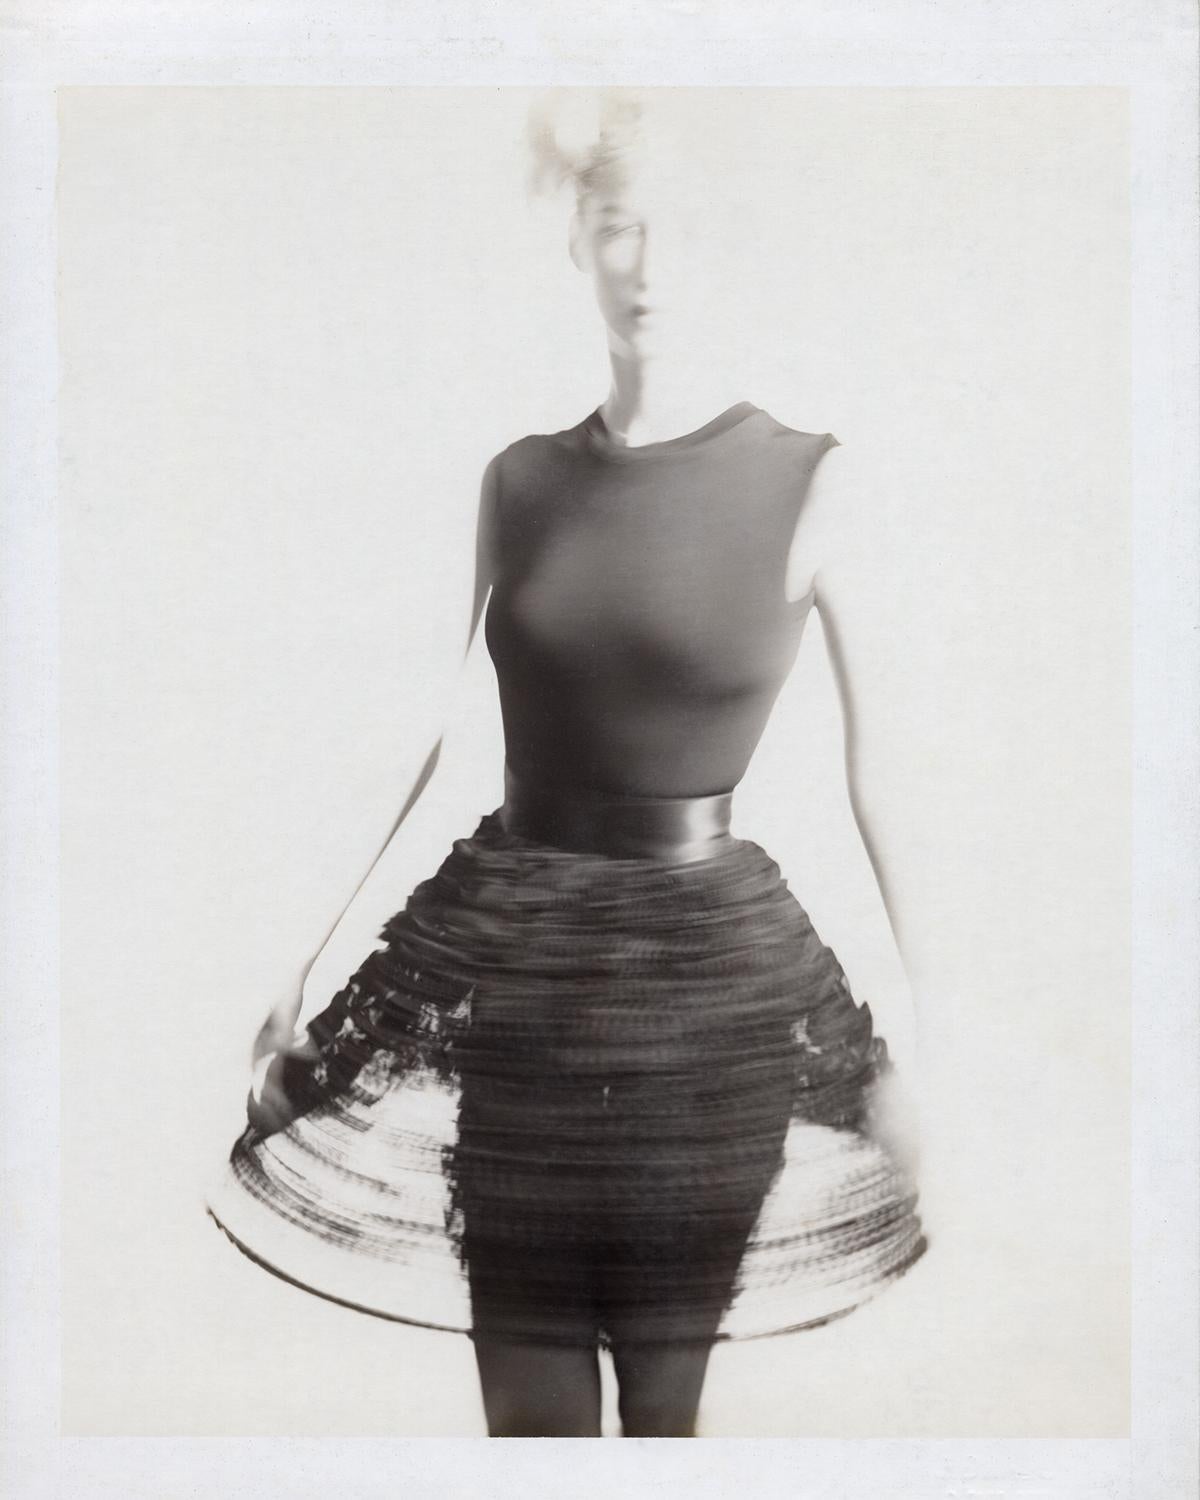 Jose Picayo Black and White Photograph - "Bomb Magazine, Anita", New York, NY, 1988